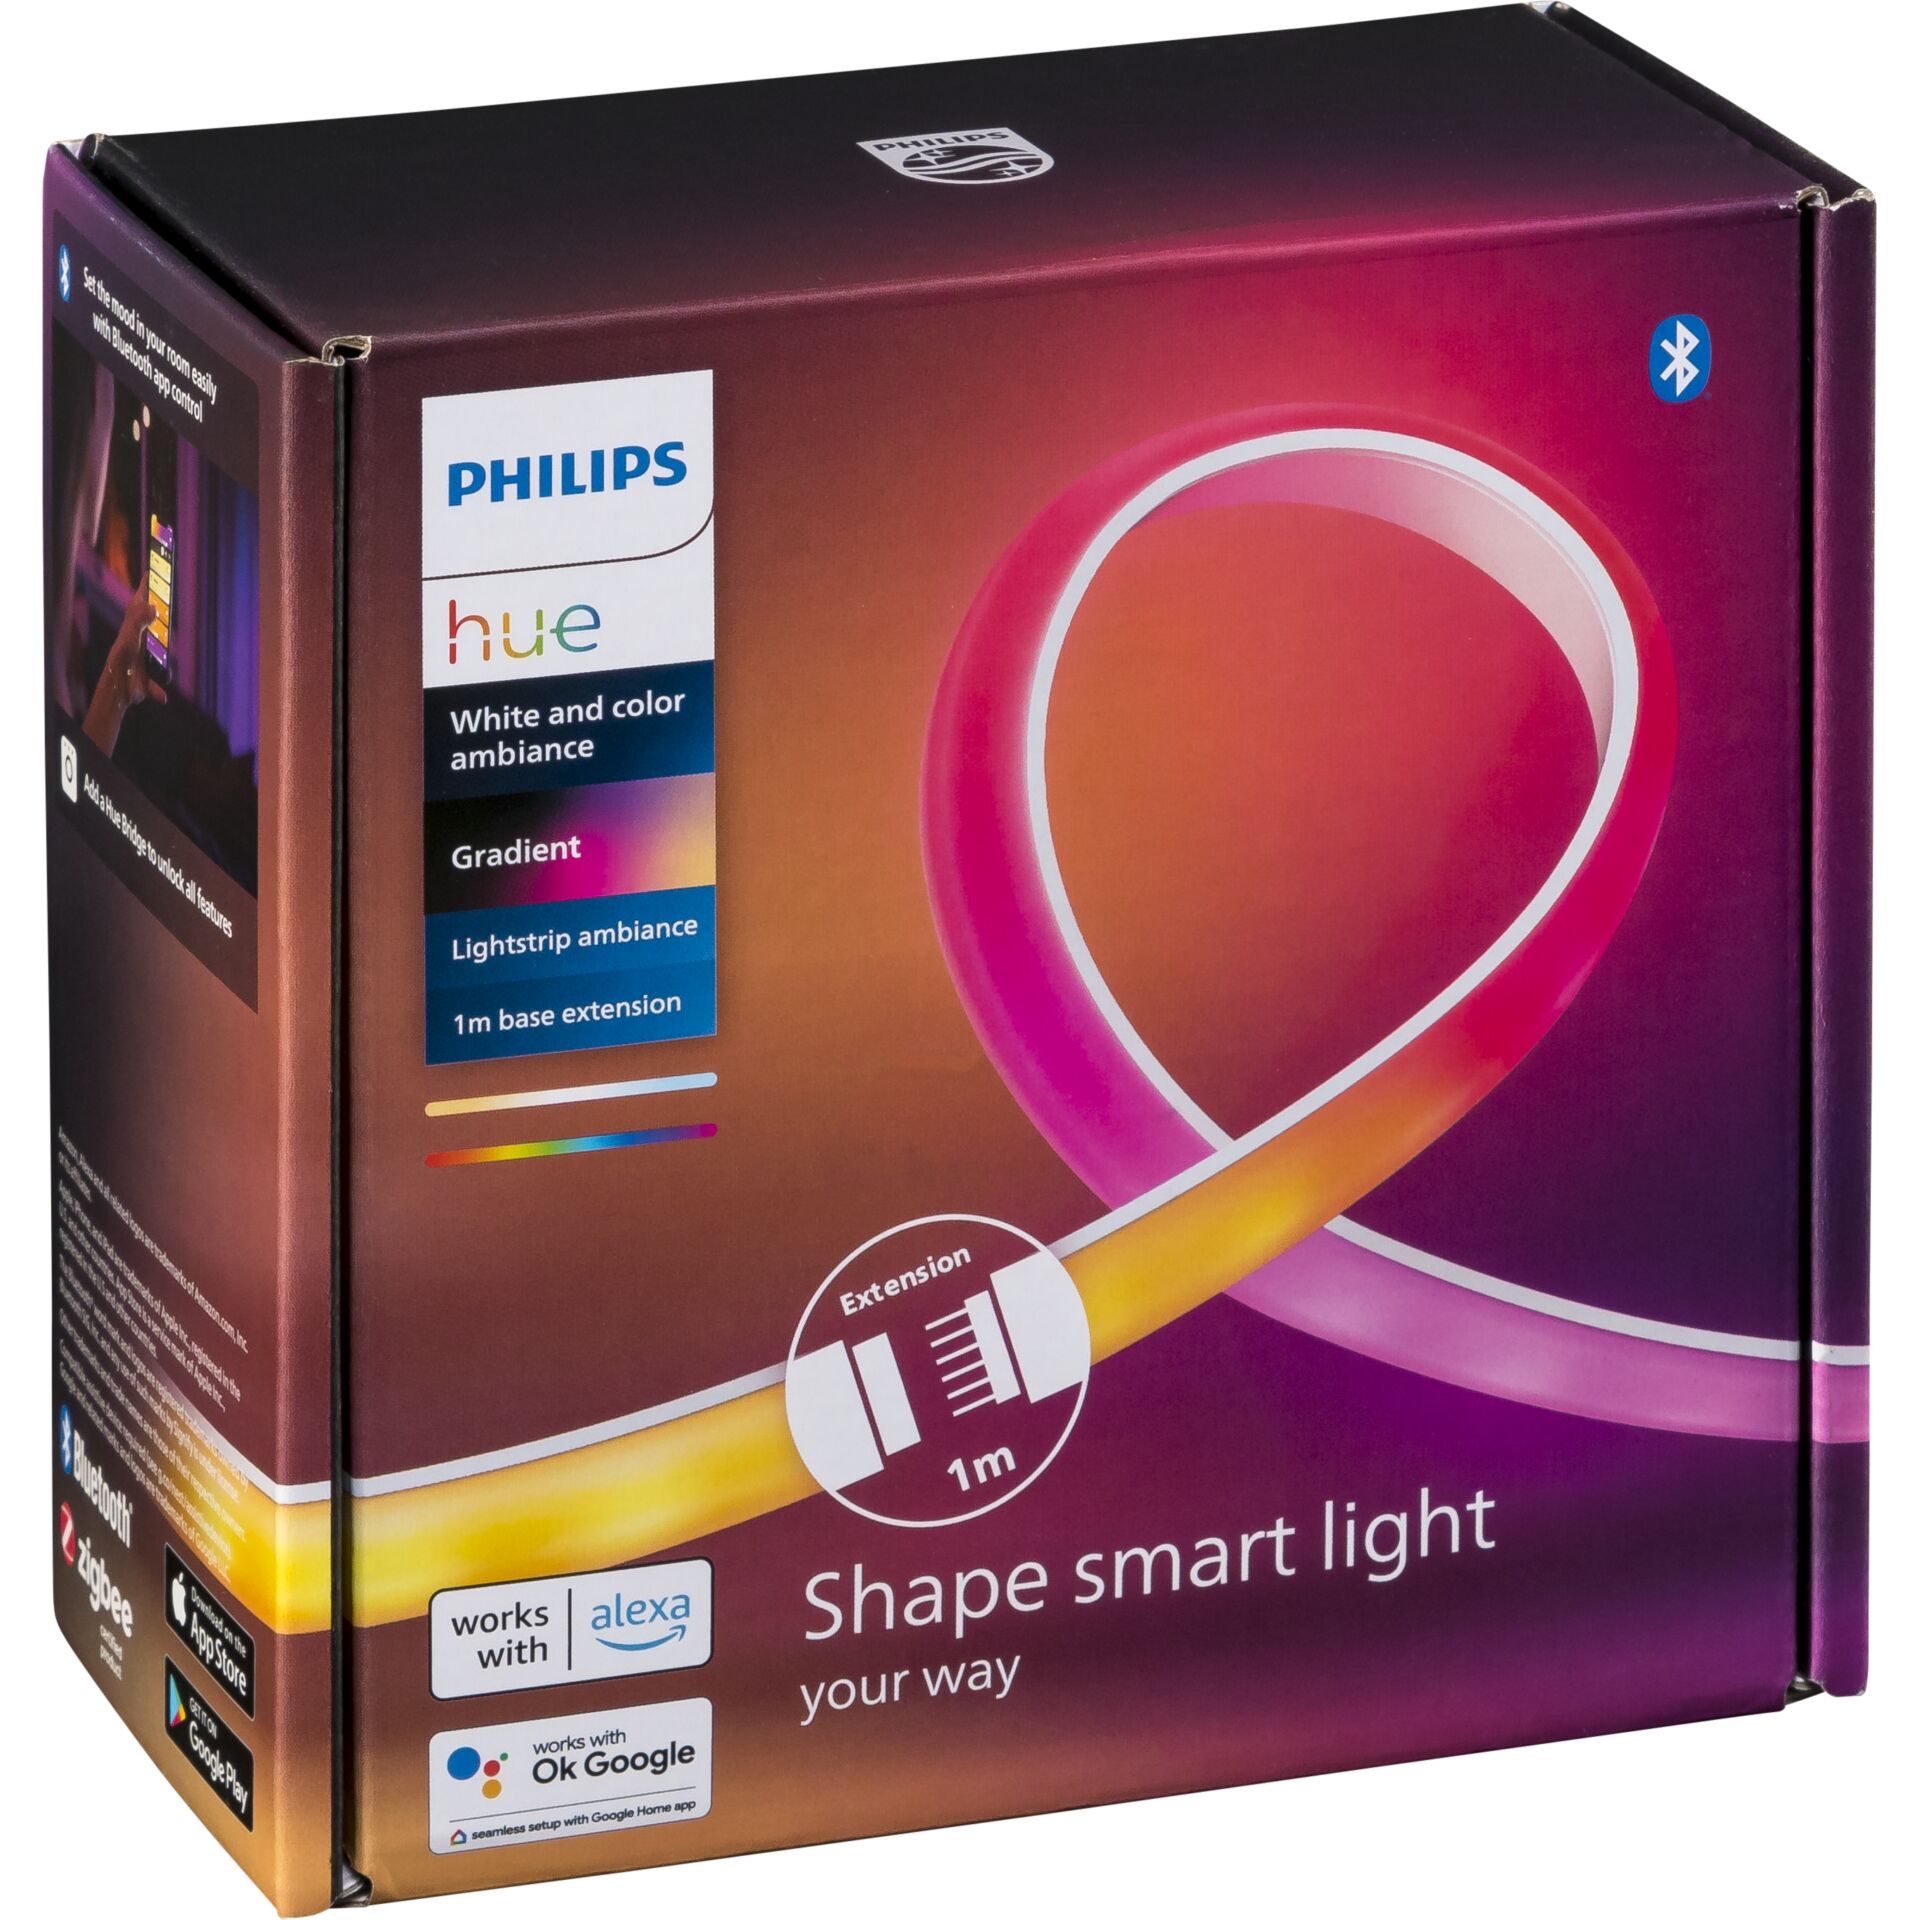 Philips Hue Gradient Lightstrip 1m Extension